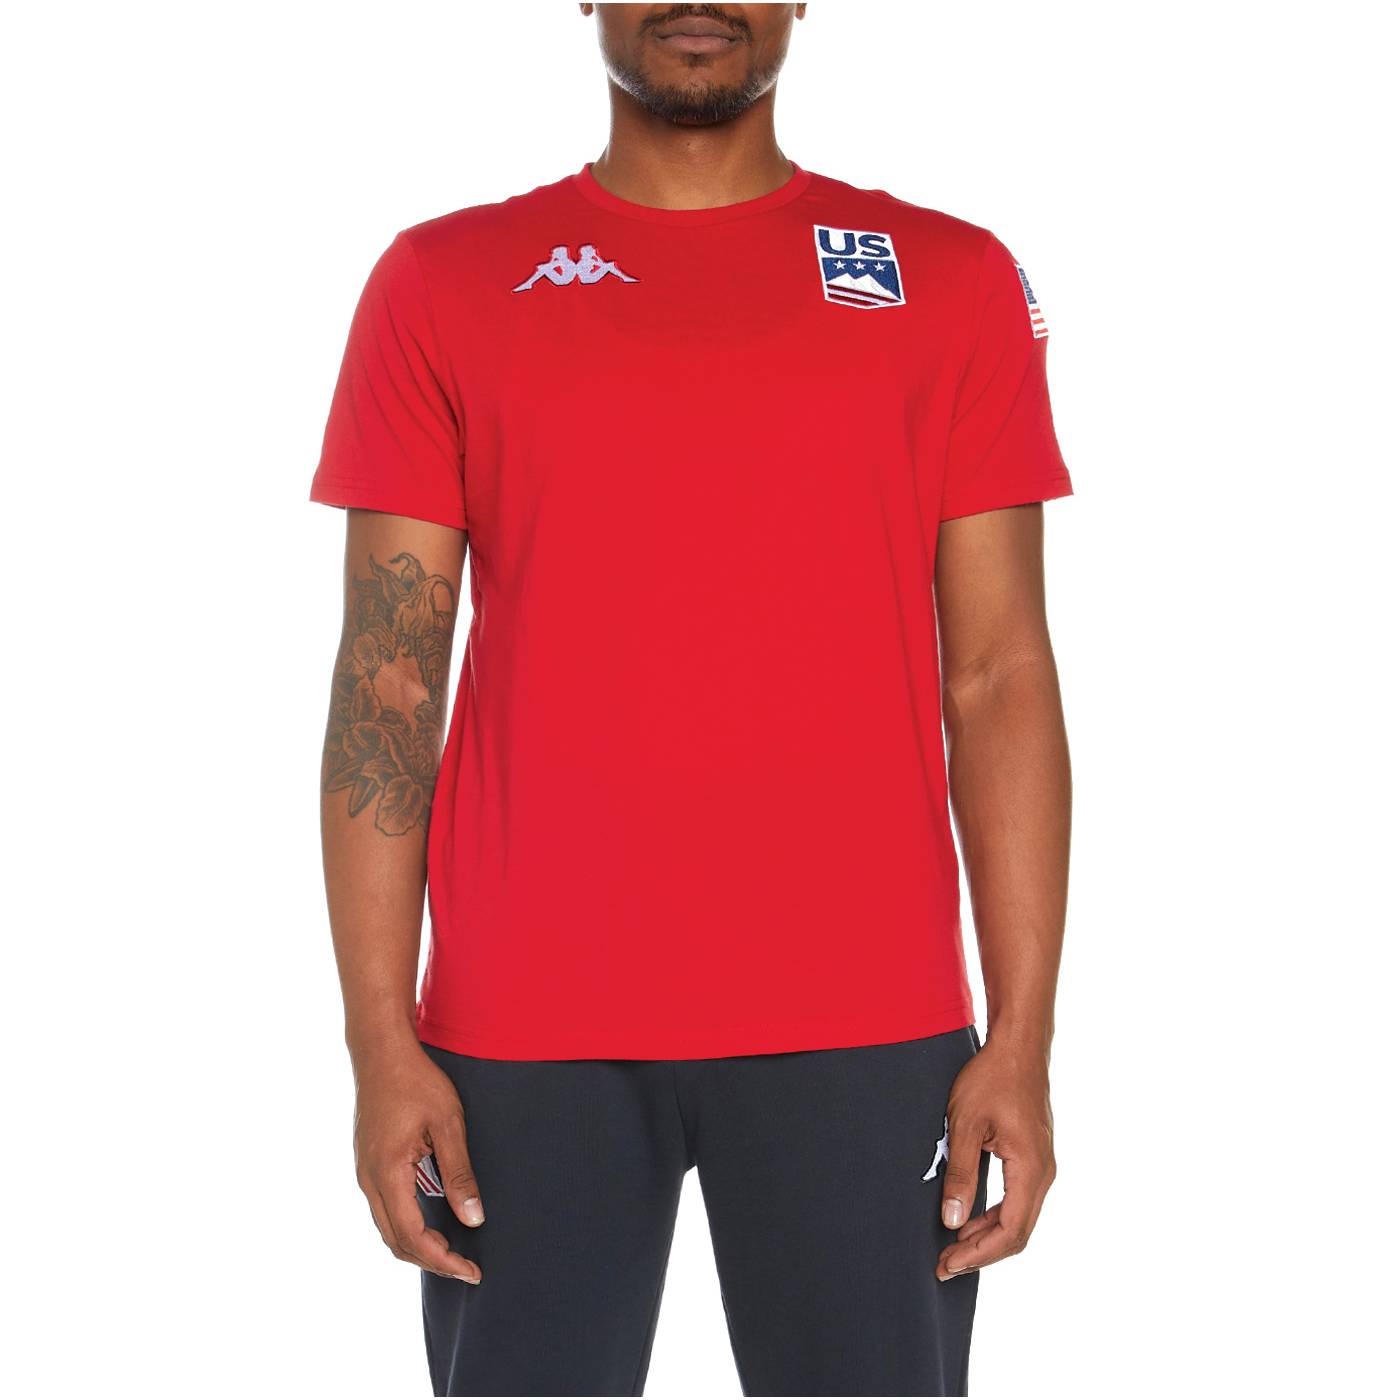 Kappa Estessi US T-shirt 2023 RED